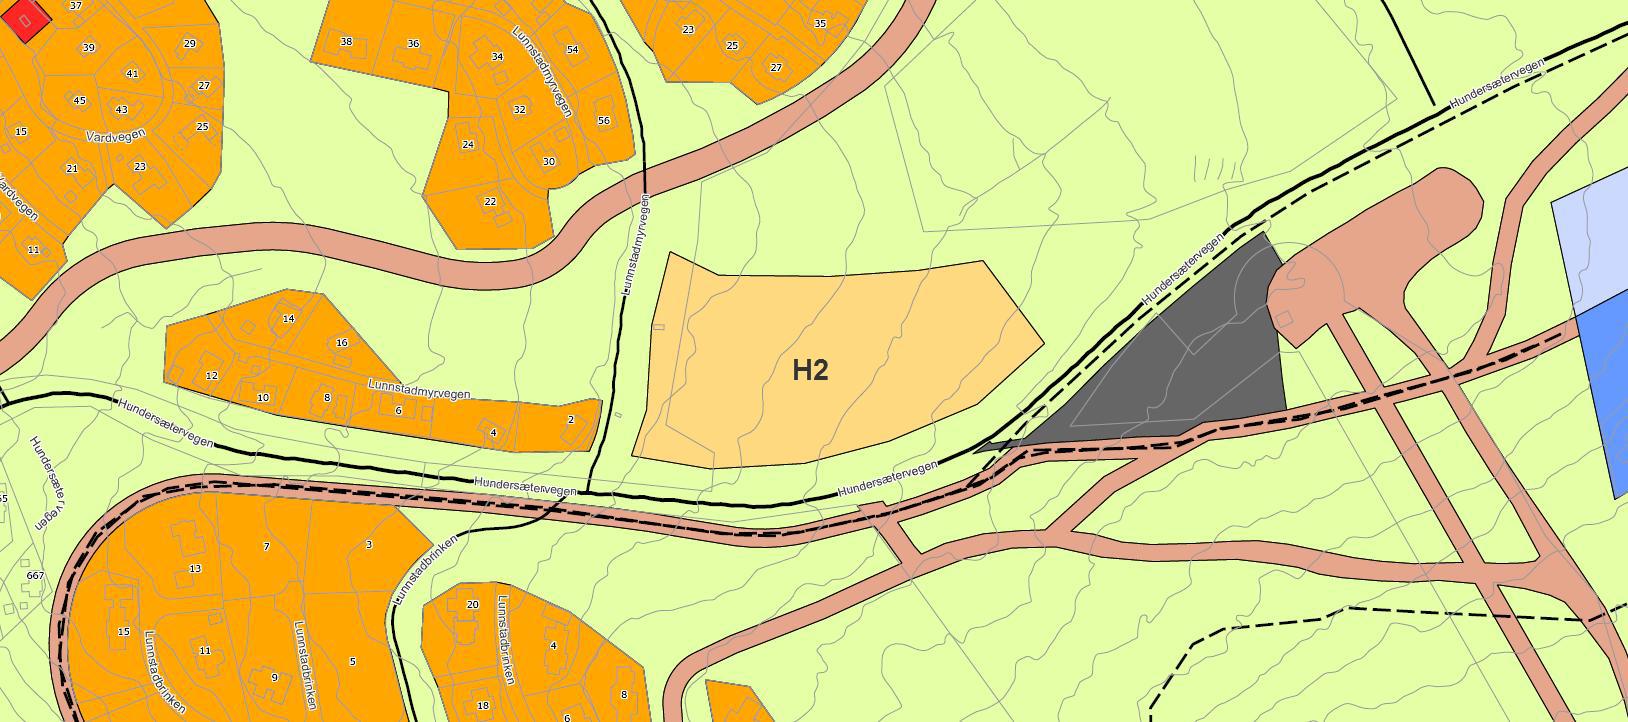 Planområdet - Hafjelltoppen hyttegrend - er 1261 dekar stort og regulerer blant annet Gaiastova med omkringliggende bebyggelse, parkering